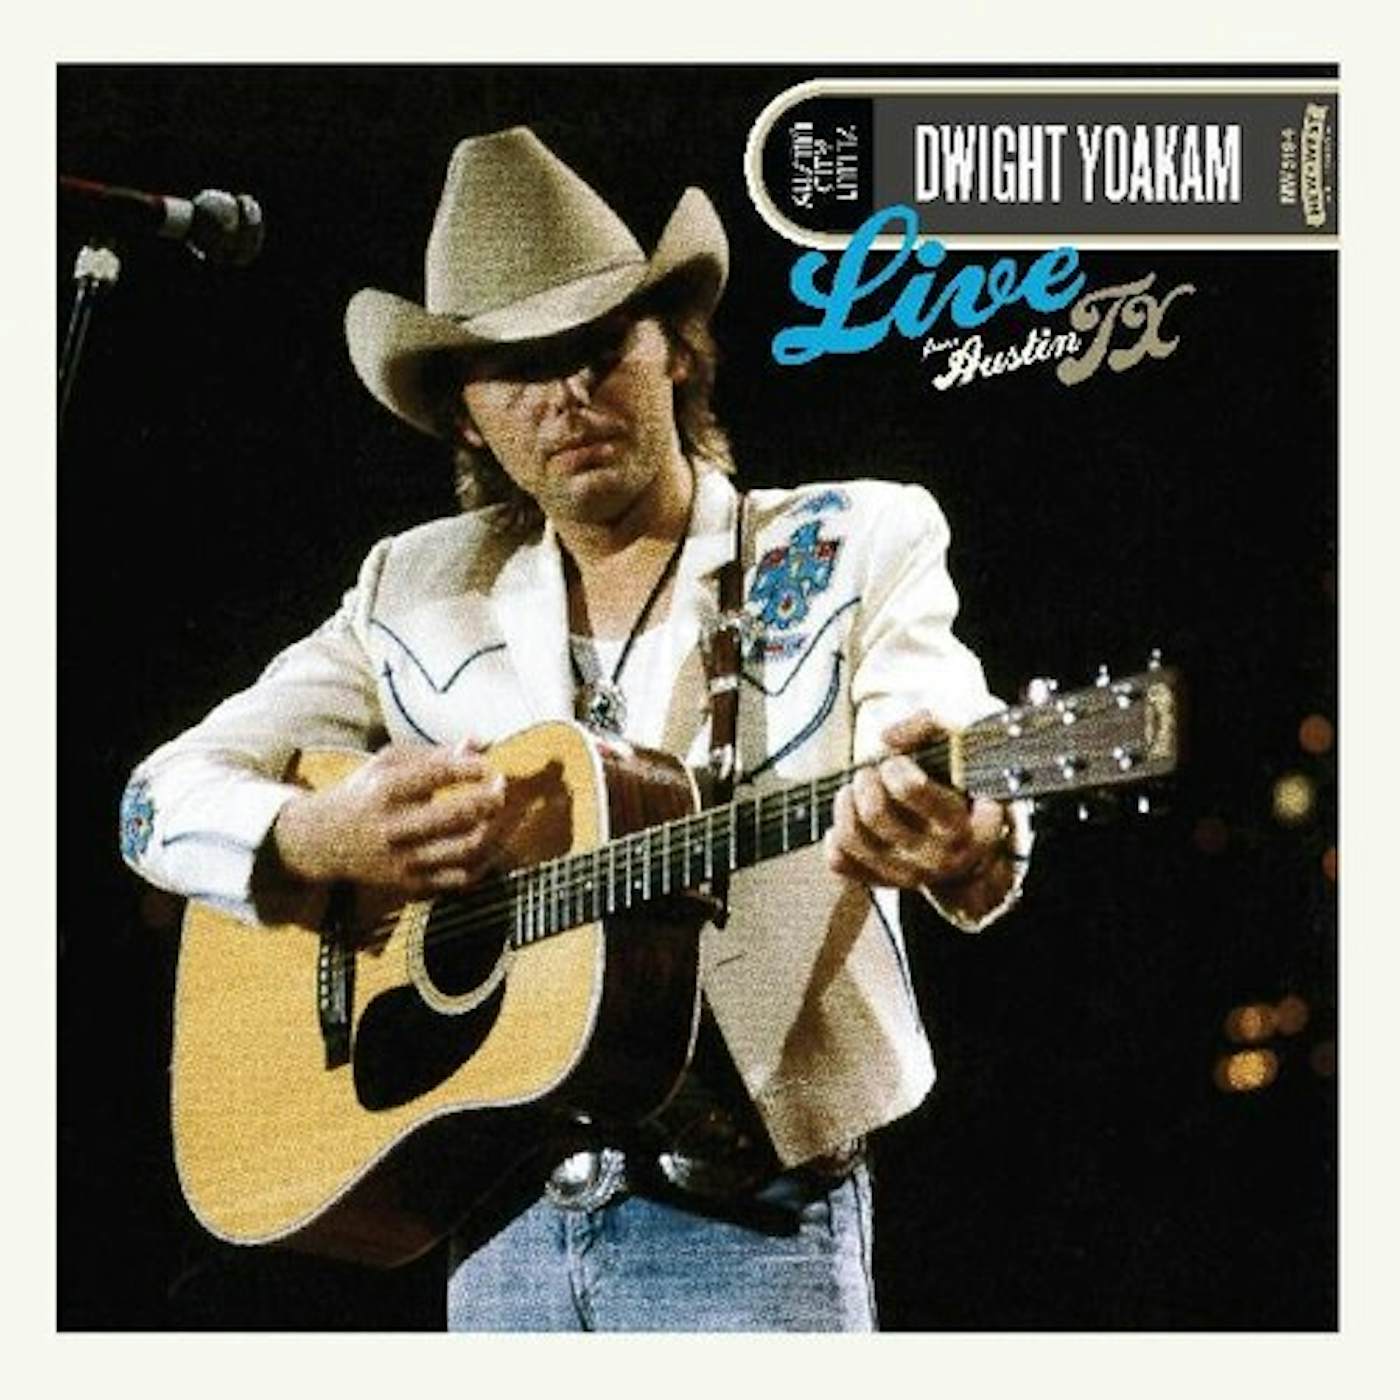 Dwight Yoakam Live From Austin TX (2LP/Blue) Vinyl Record